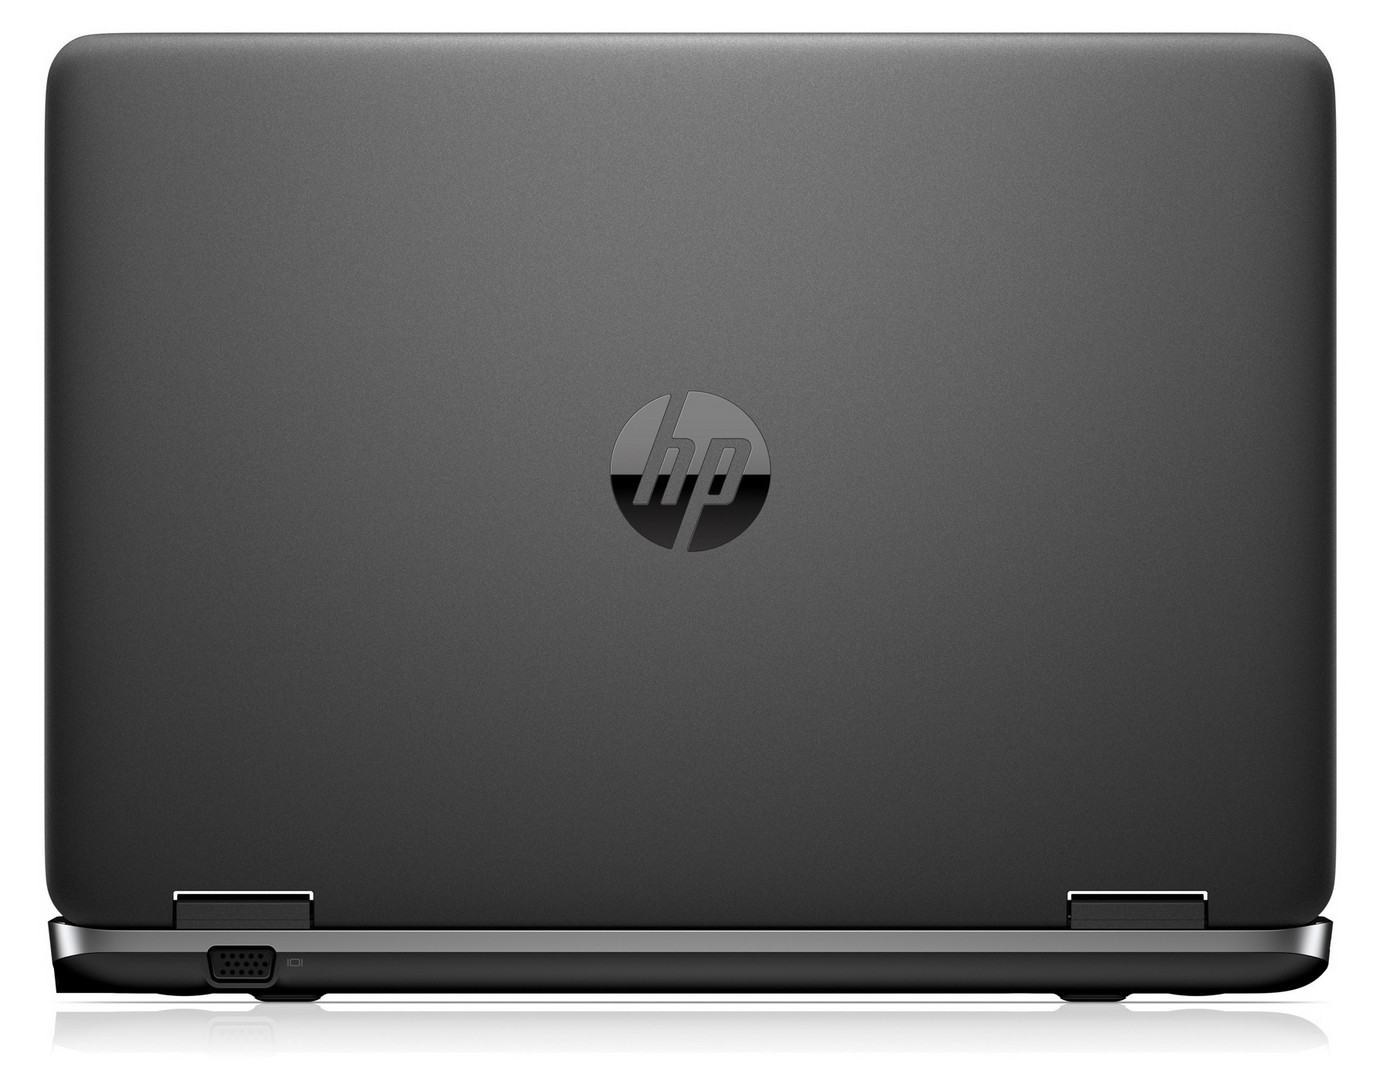 Ноутбук HP ProBook 640 G3 Core i5-7200U 2.5GHz,14" FHD (1920x1080) AG,8Gb DDR4(1),256Gb SSD,DVDRW,48Wh LL,FPR,2.1kg,1y,Gray,Win10Pro-15854